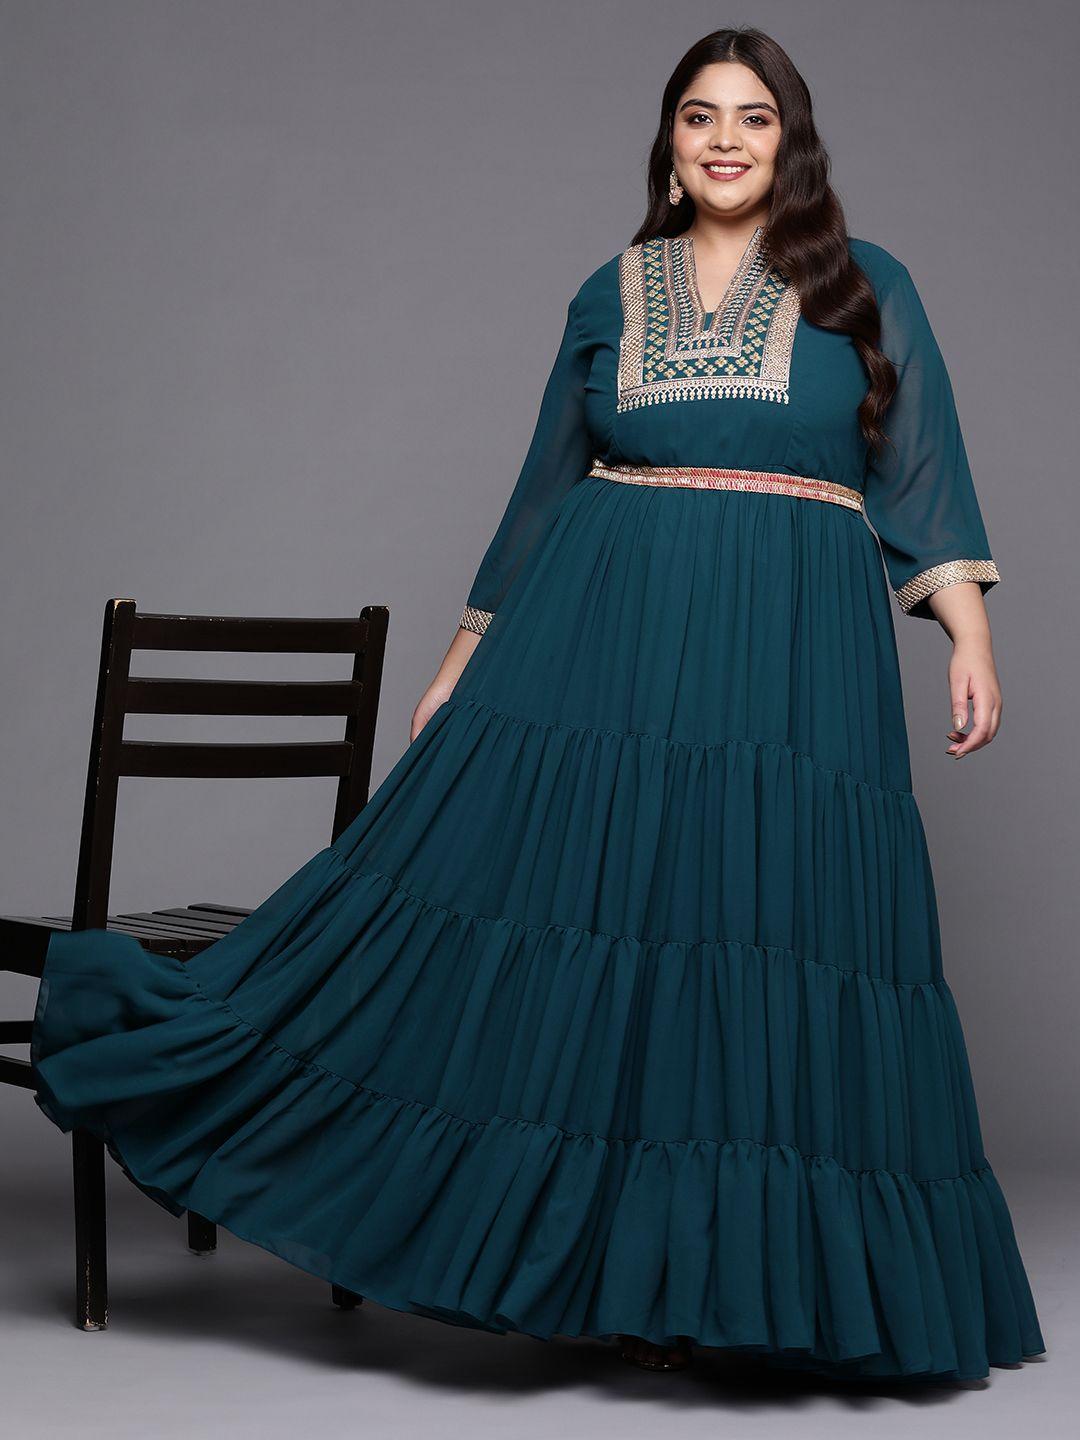 inddus-plus-women-plus-size-yoke-design-embroidered-ethnic-maxi-gown